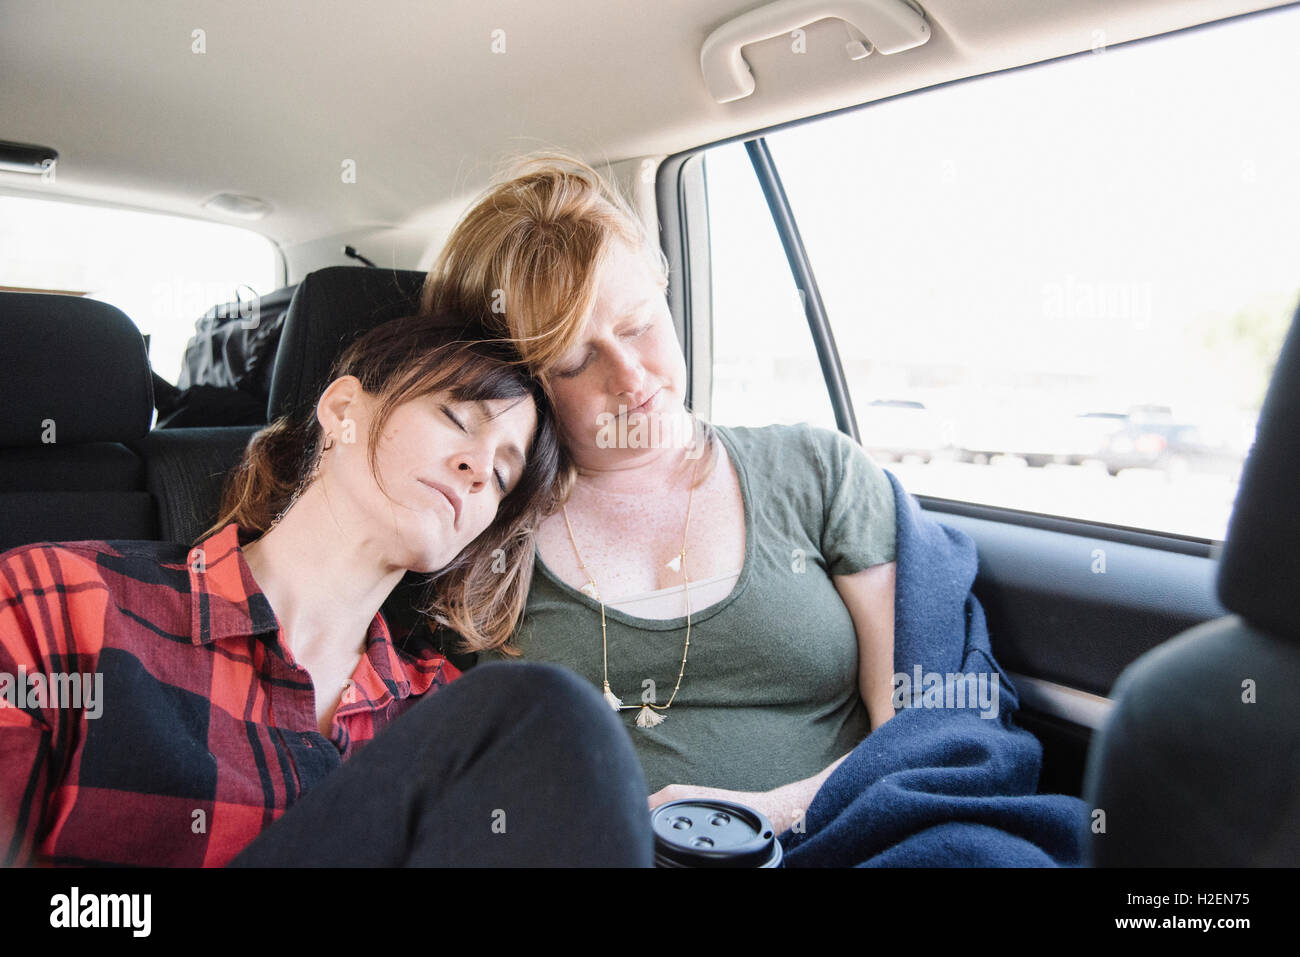 Lesbians fool around backseat limo pic